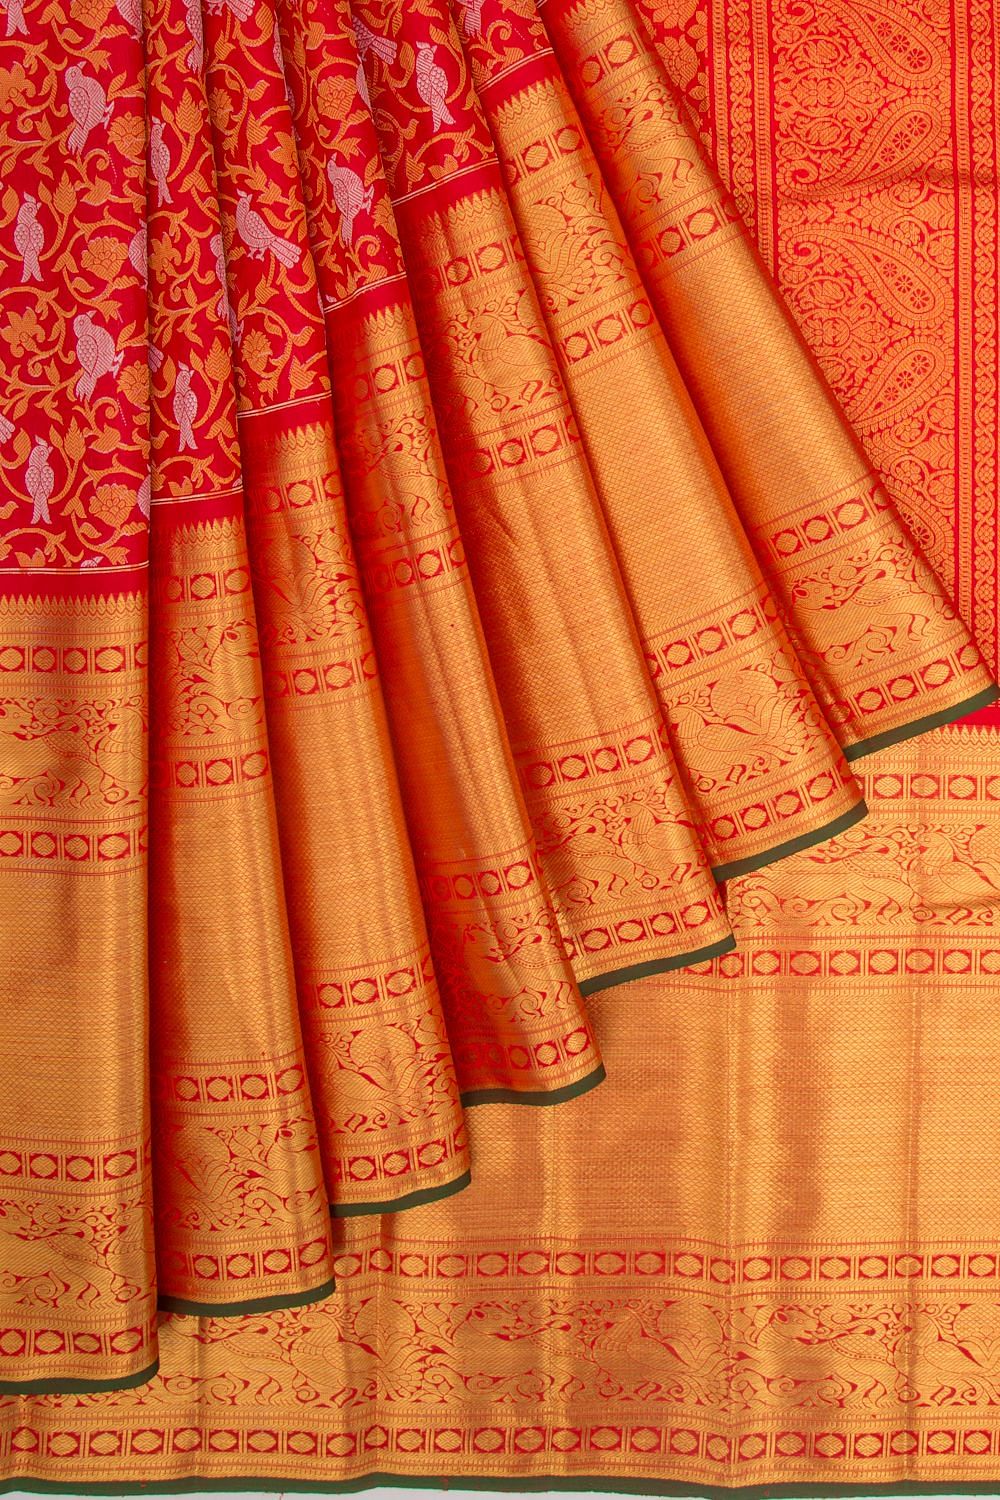 Red Kanjivaram Saree - Enhance Your Look